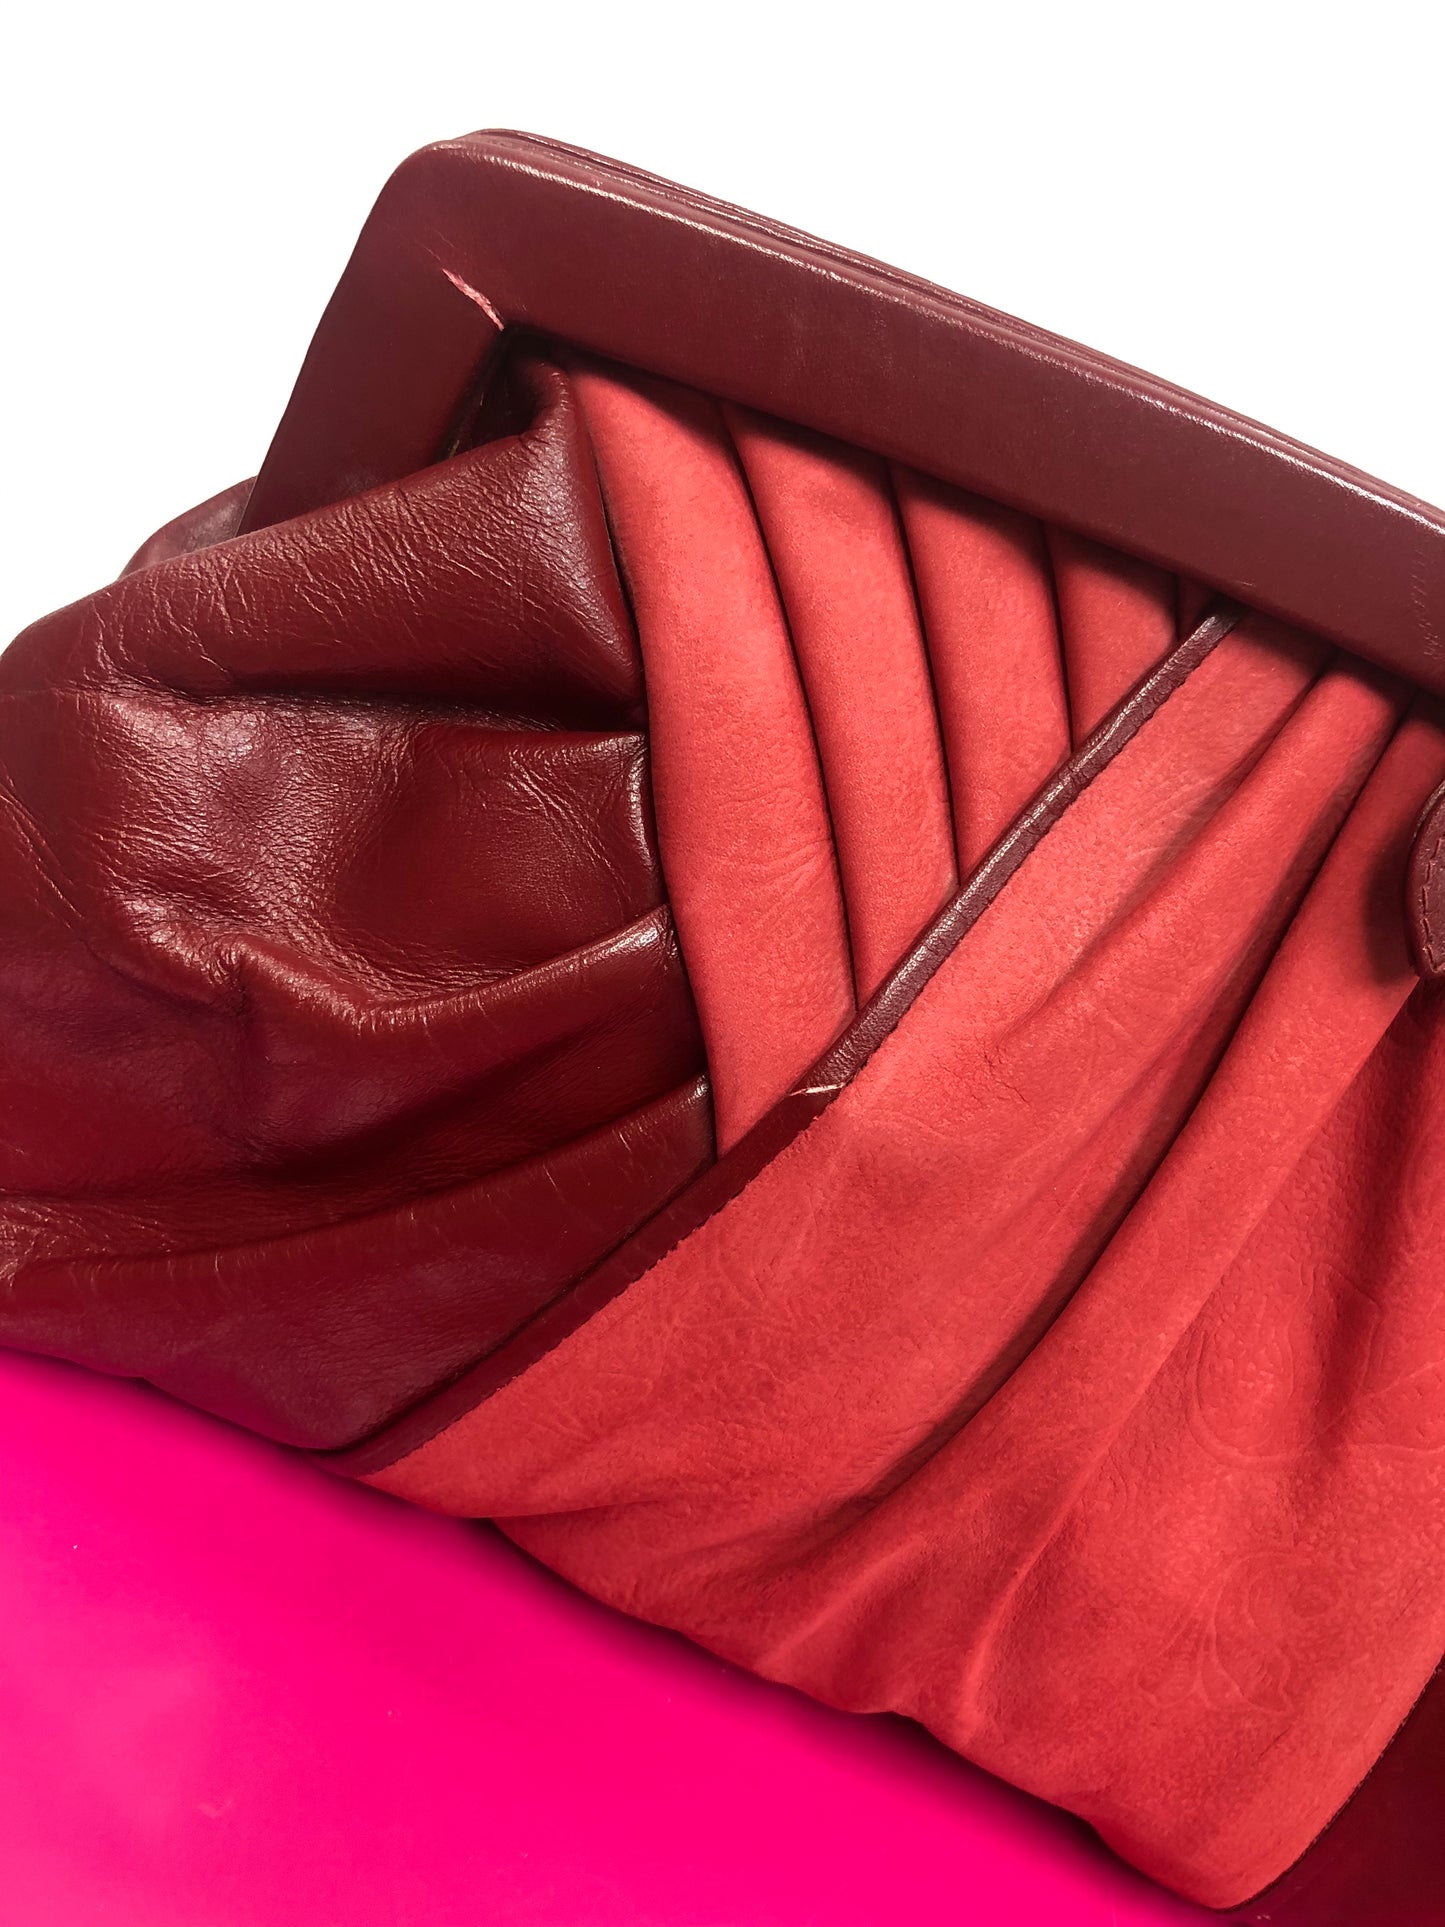 Vintage “Ruby” Handbag